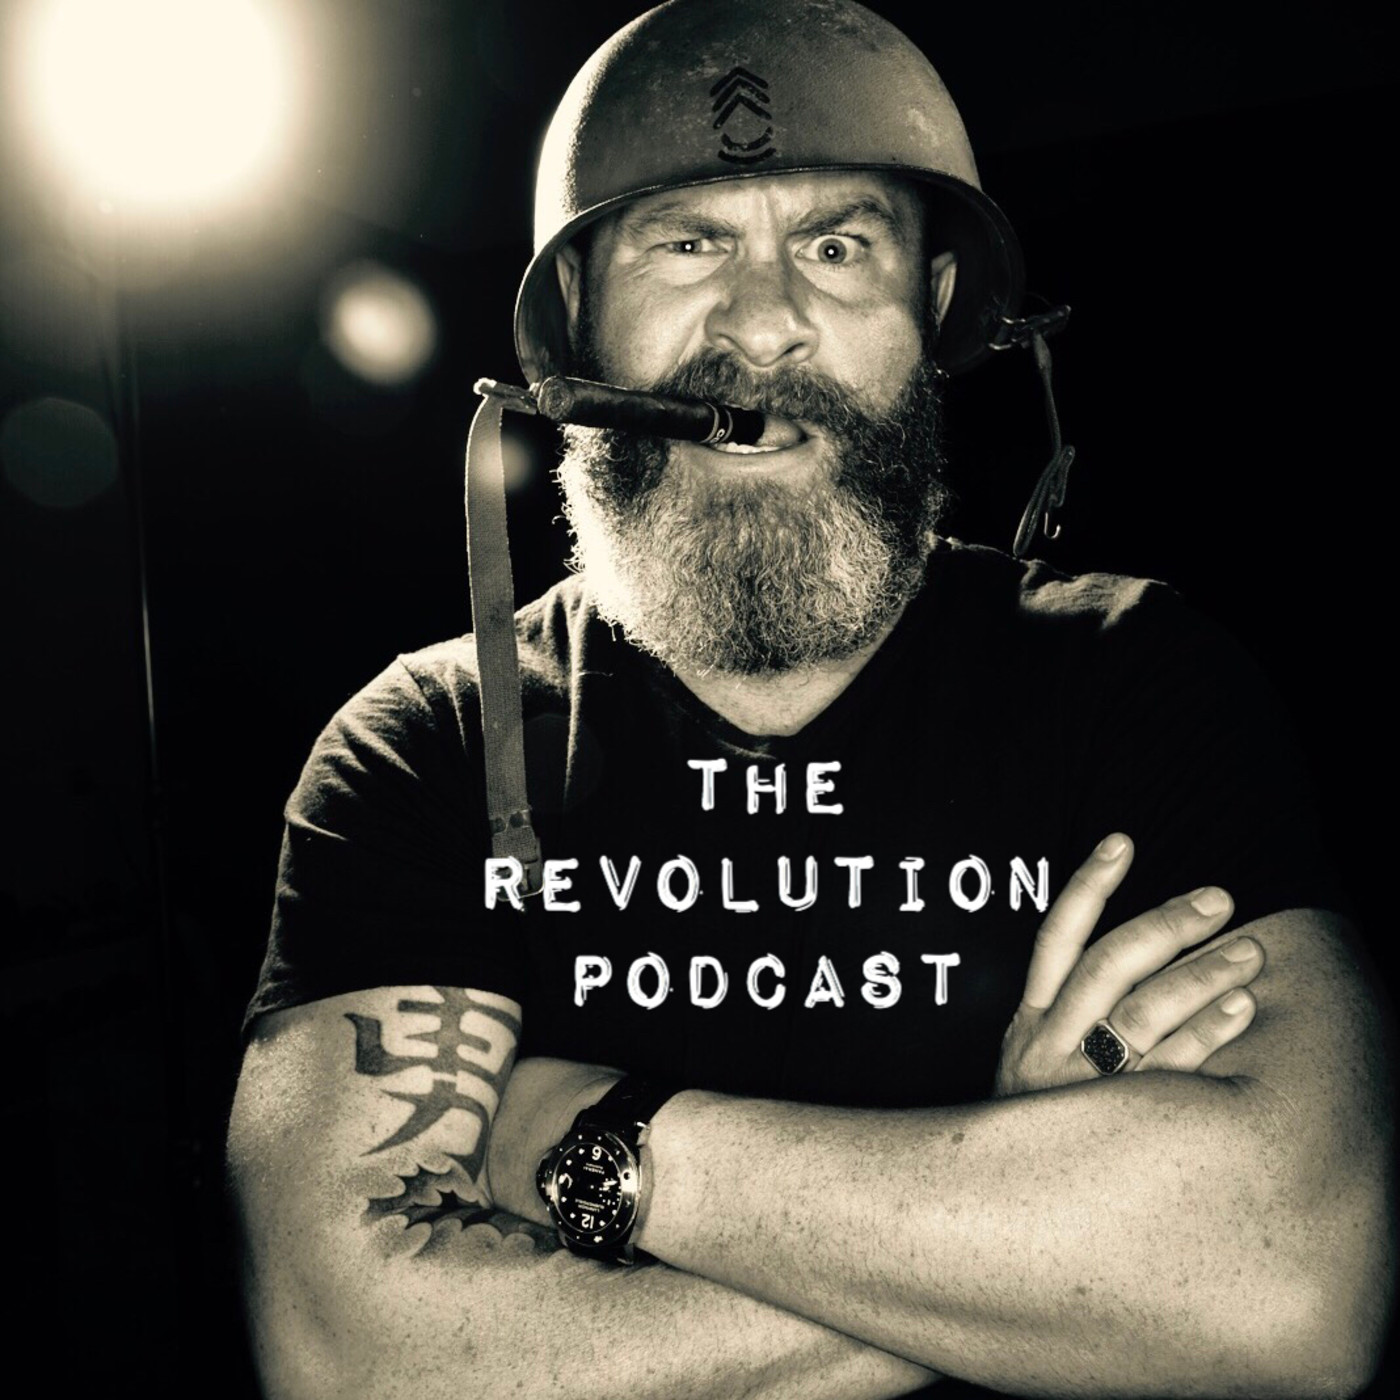 The Revolution Podcast